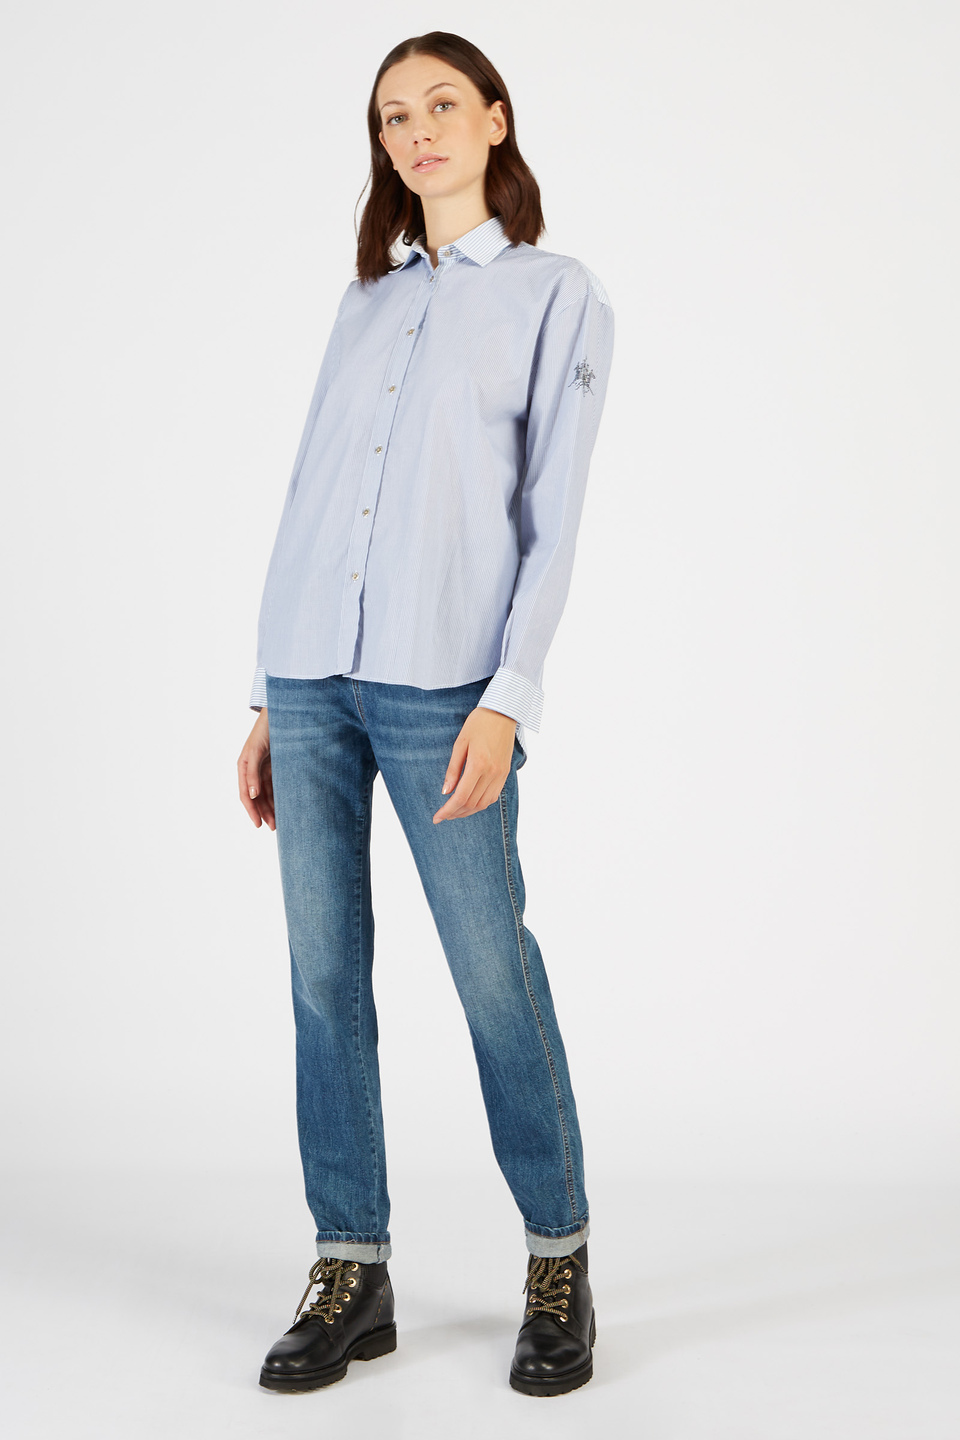 Camicia donna Timeless a righe in cotone maniche lunghe regular fit | La Martina - Official Online Shop